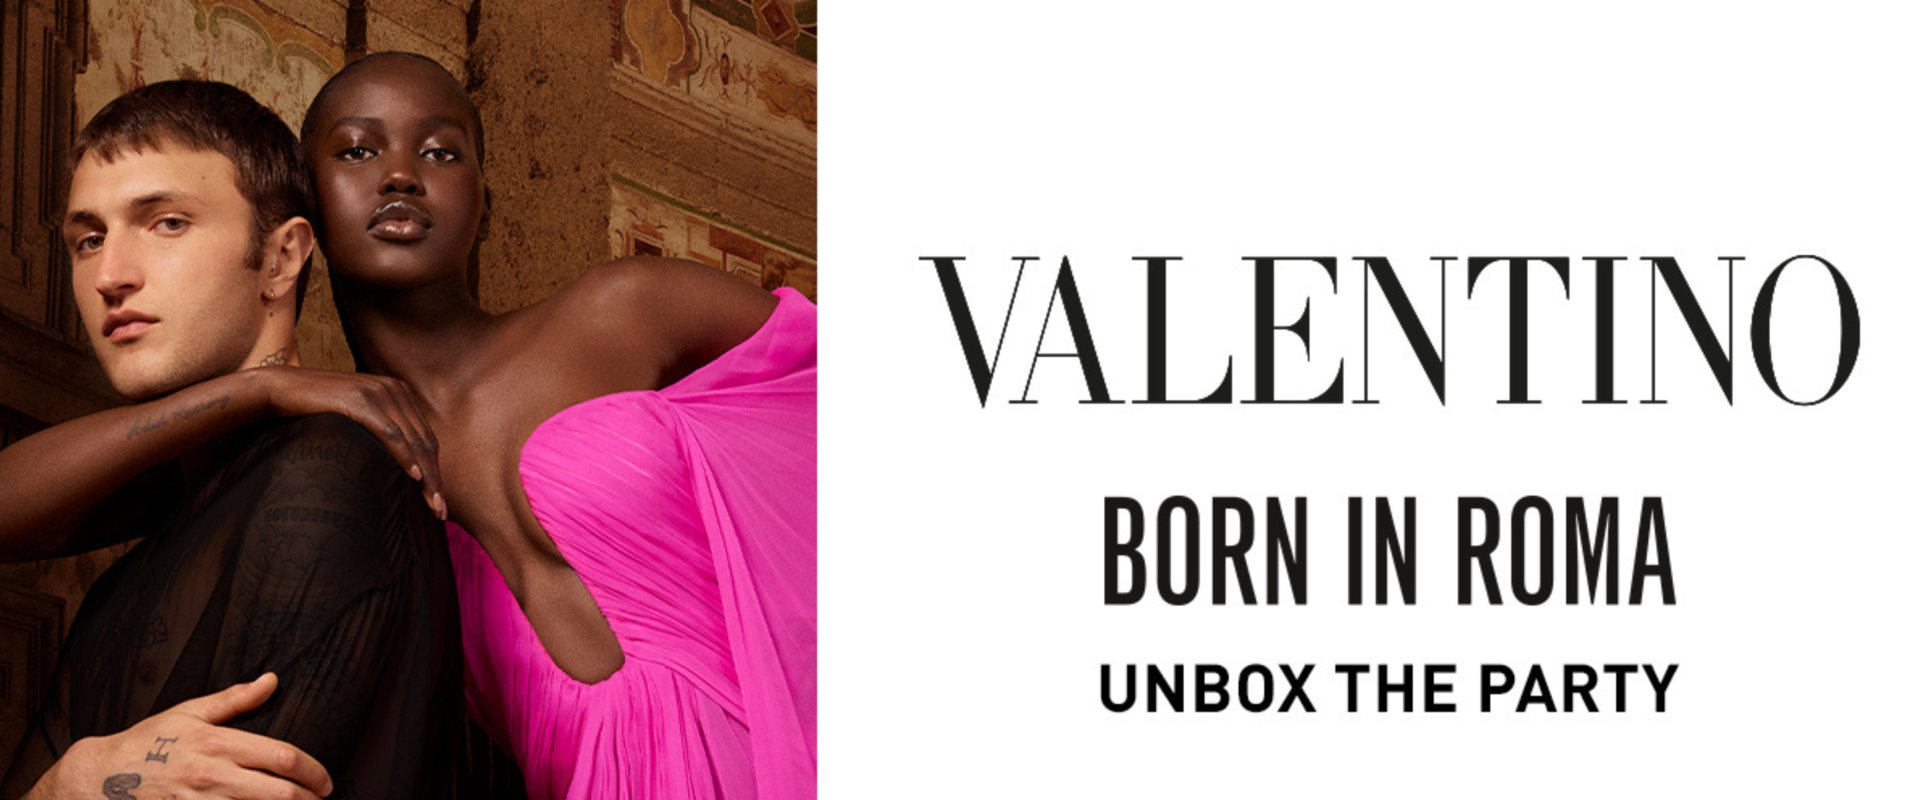 Valentino varumärkesbild